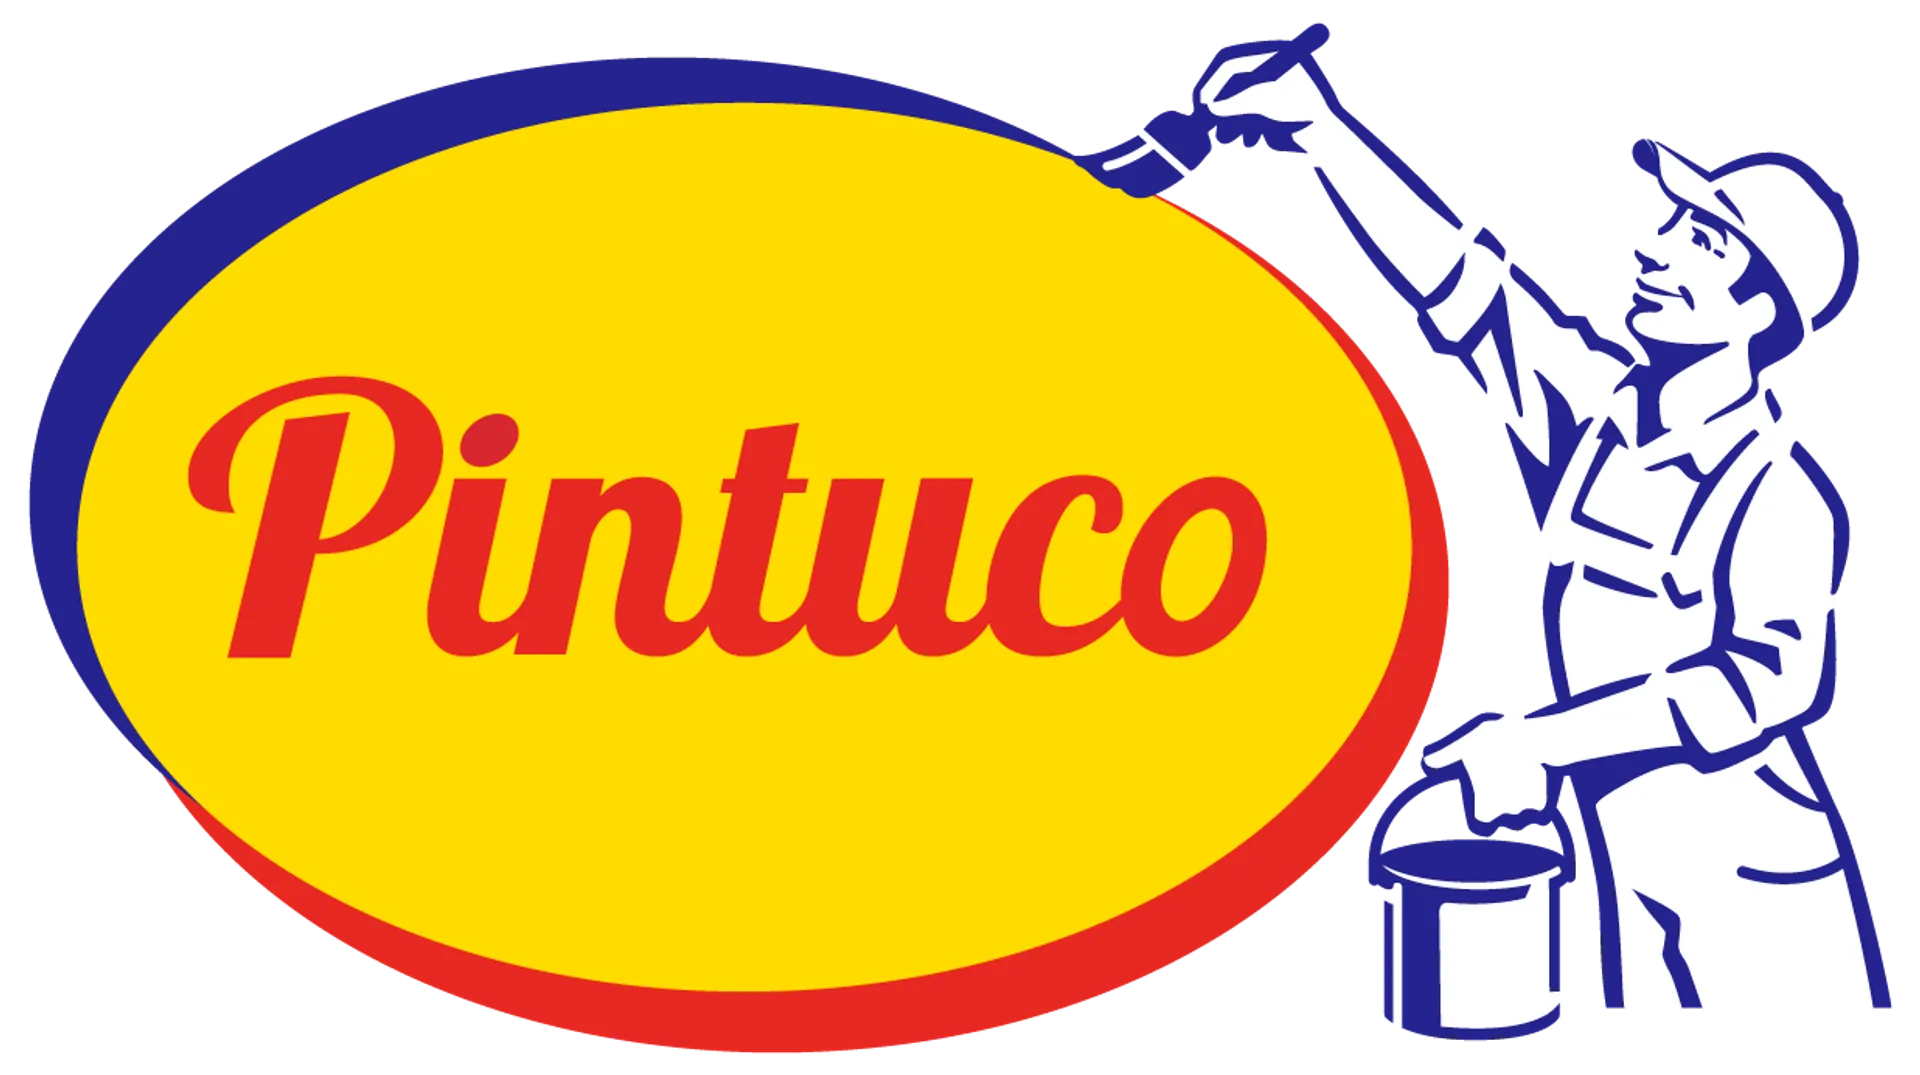 PINTUCO logo